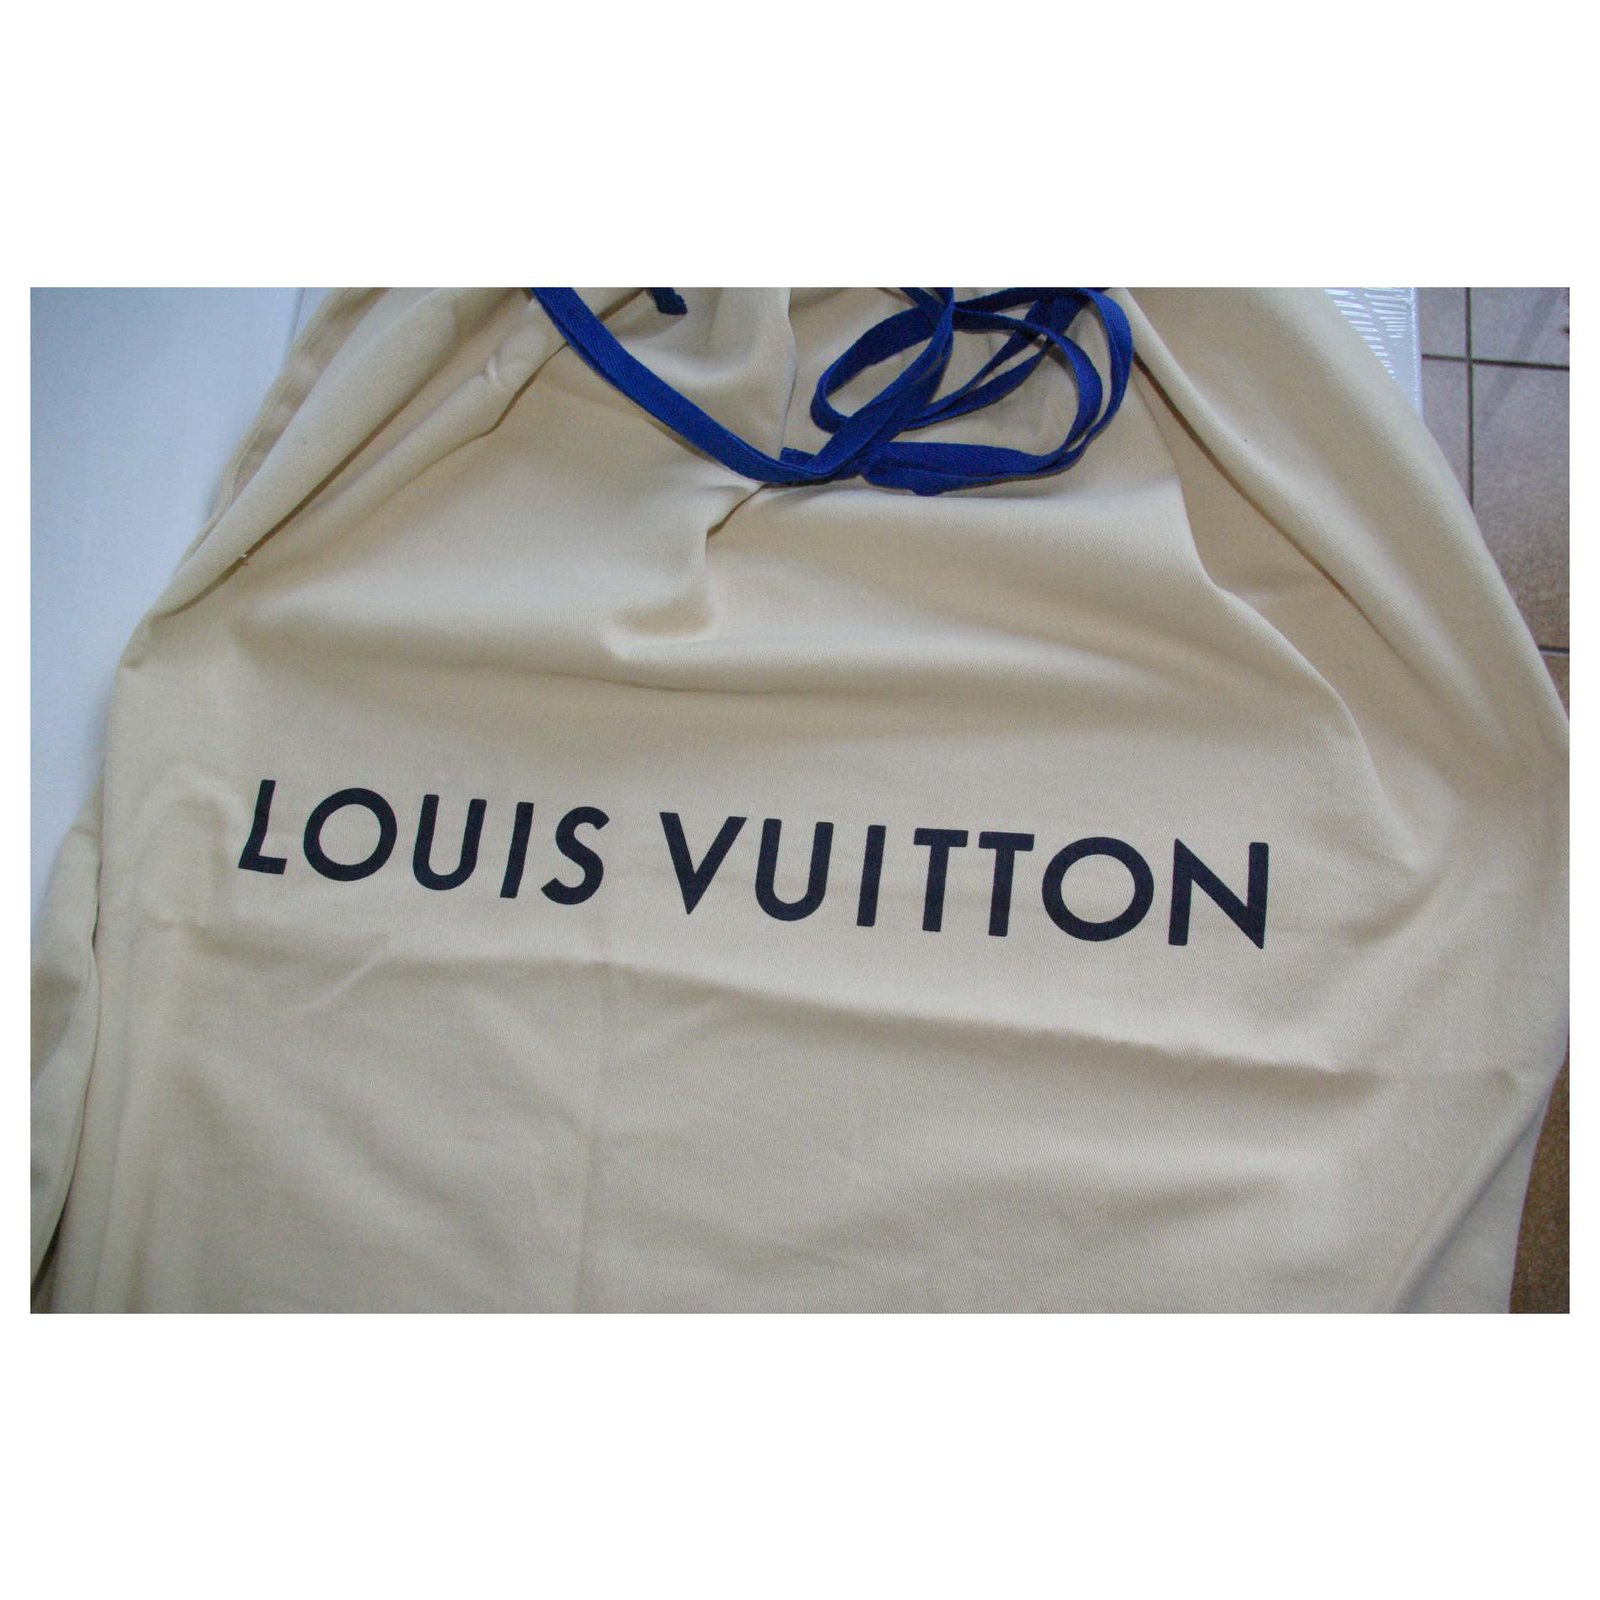 Authentic Louis Vuitton extra large dustbag